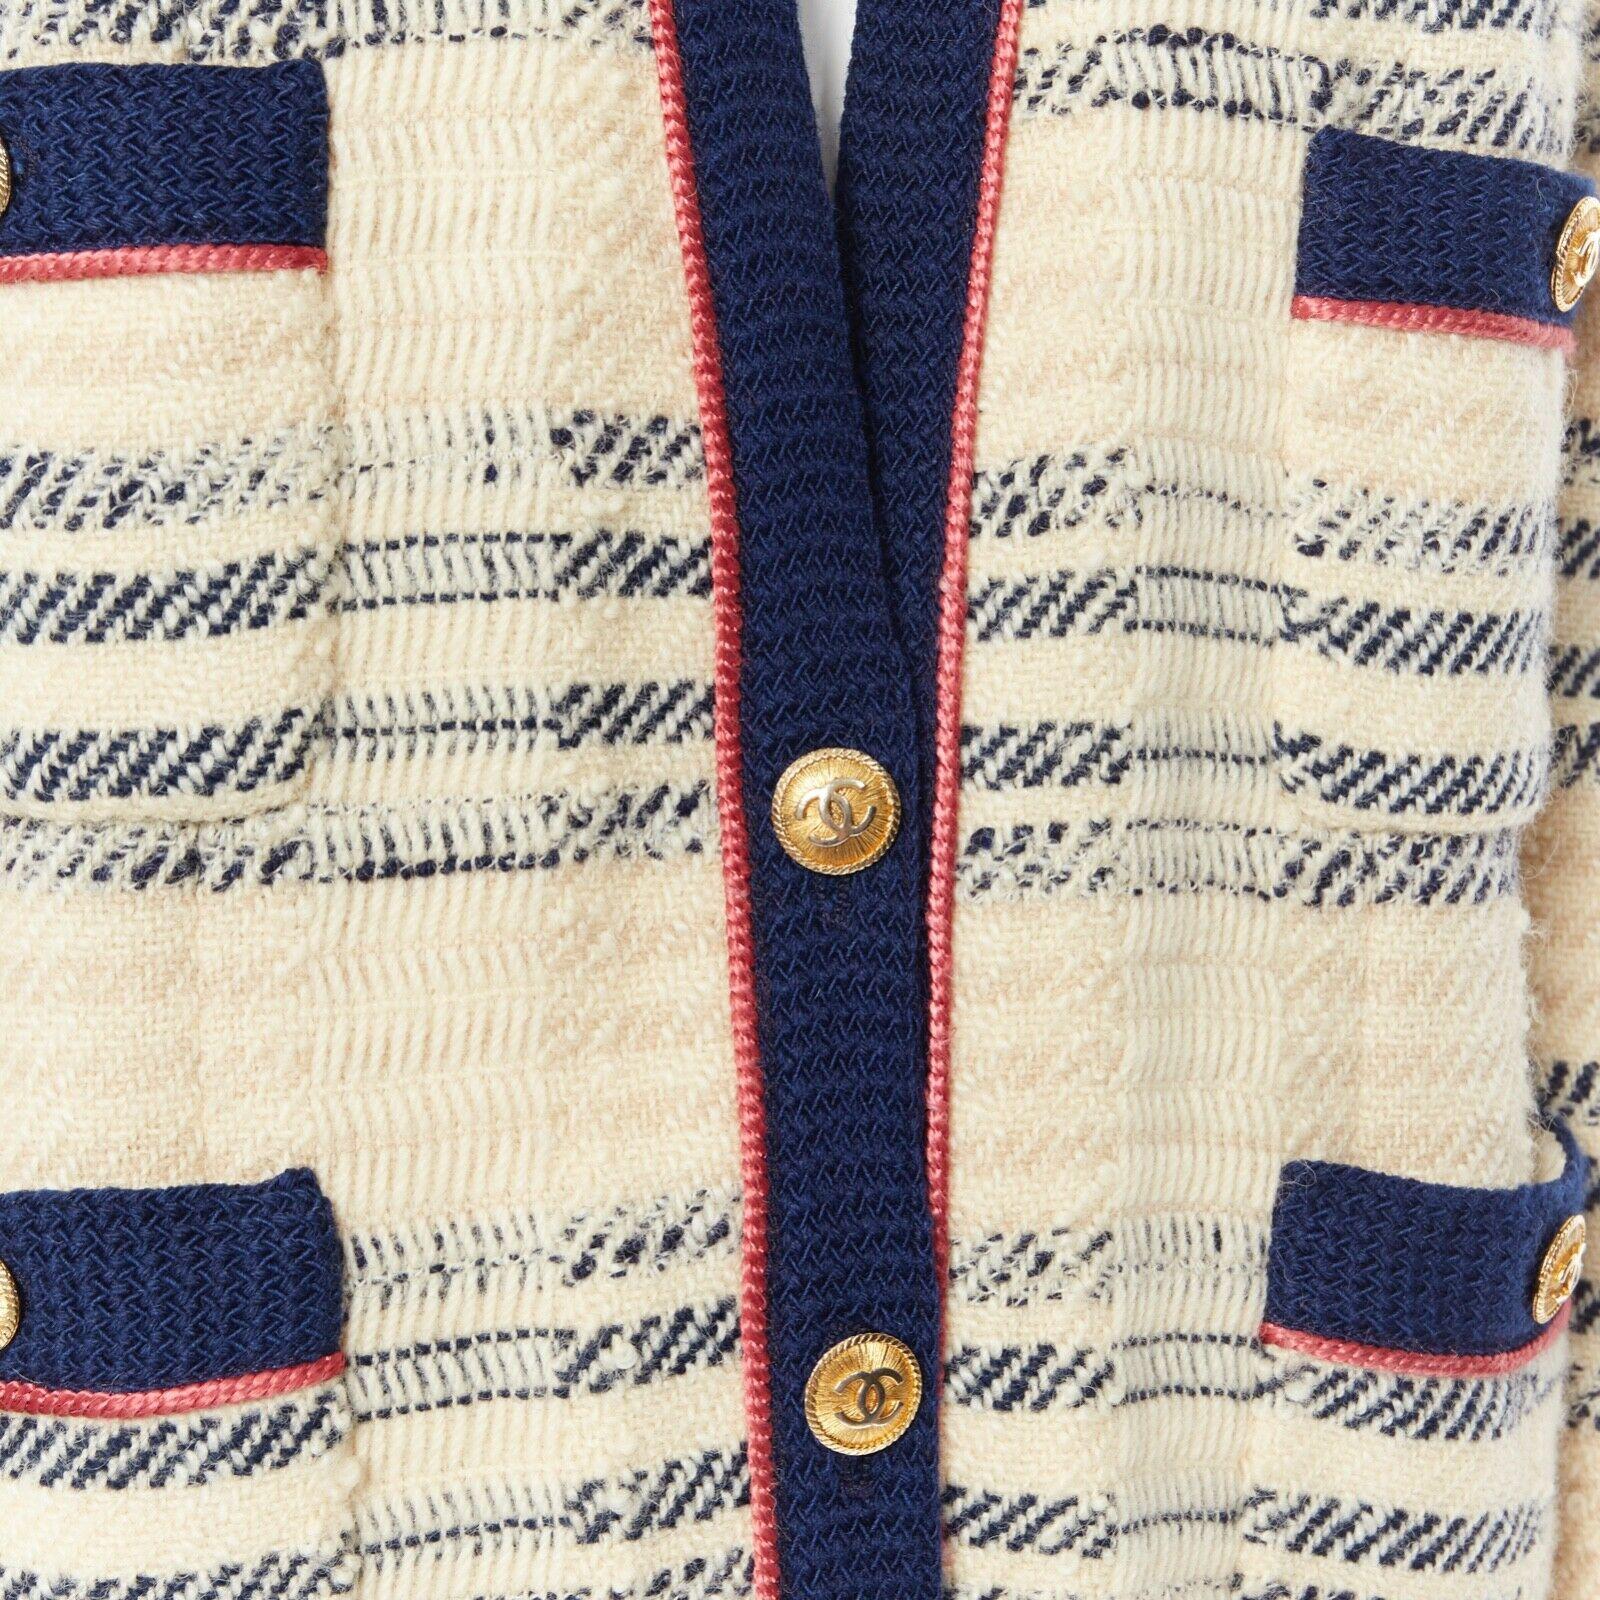 Women's CHANEL vintage ecru navy blue pink 4 pockets cardigan jacket 13 gold buttons